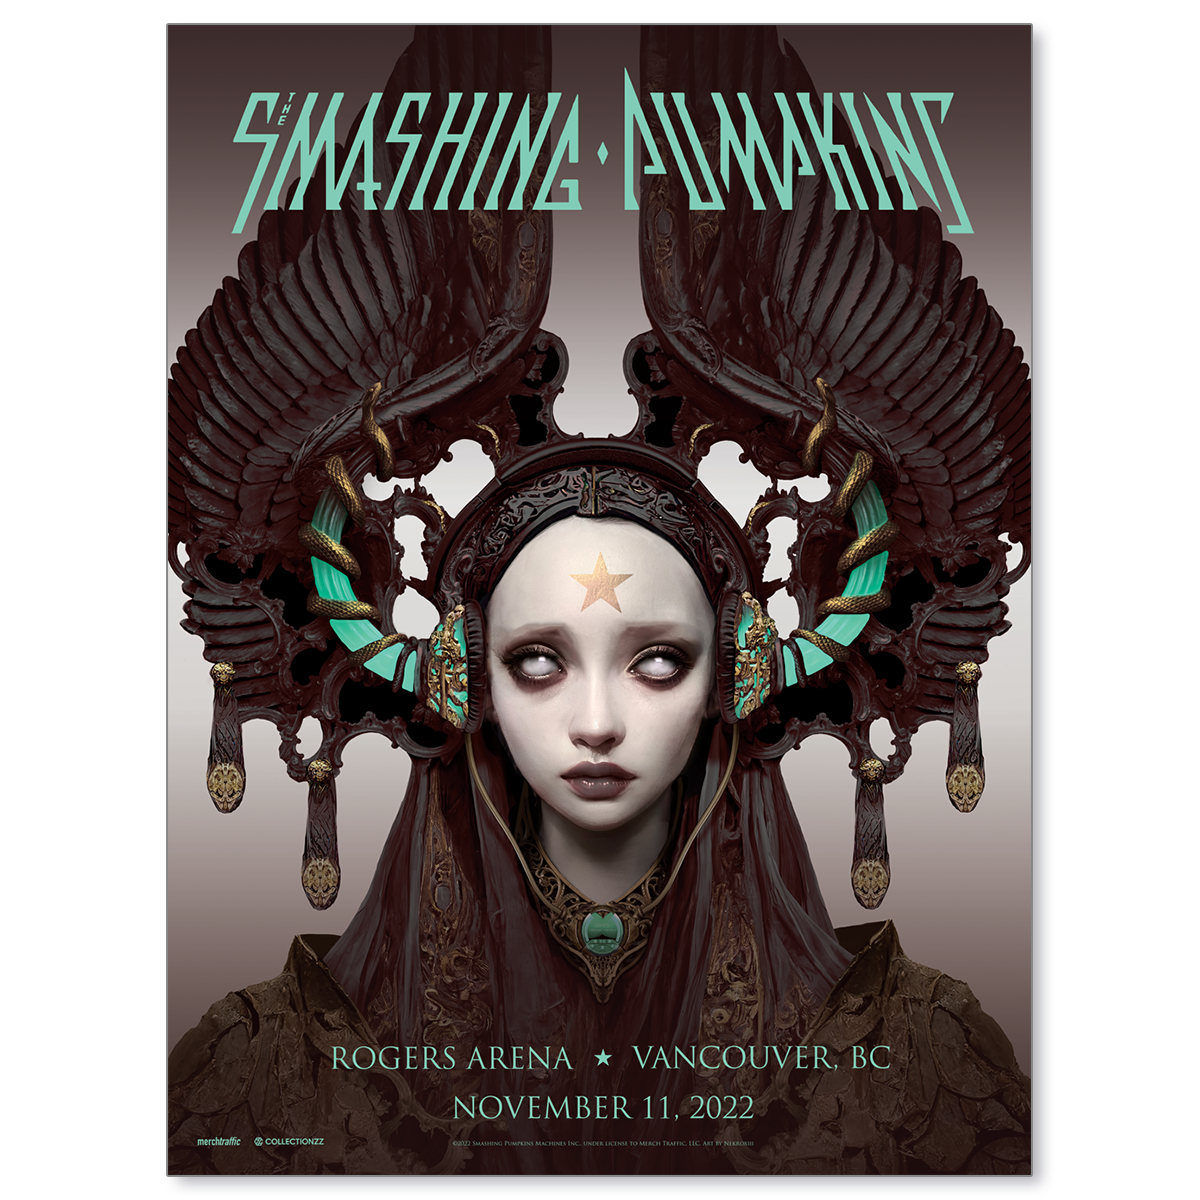 The Smashing Pumpkins Vancouver November 11, 2022 Print